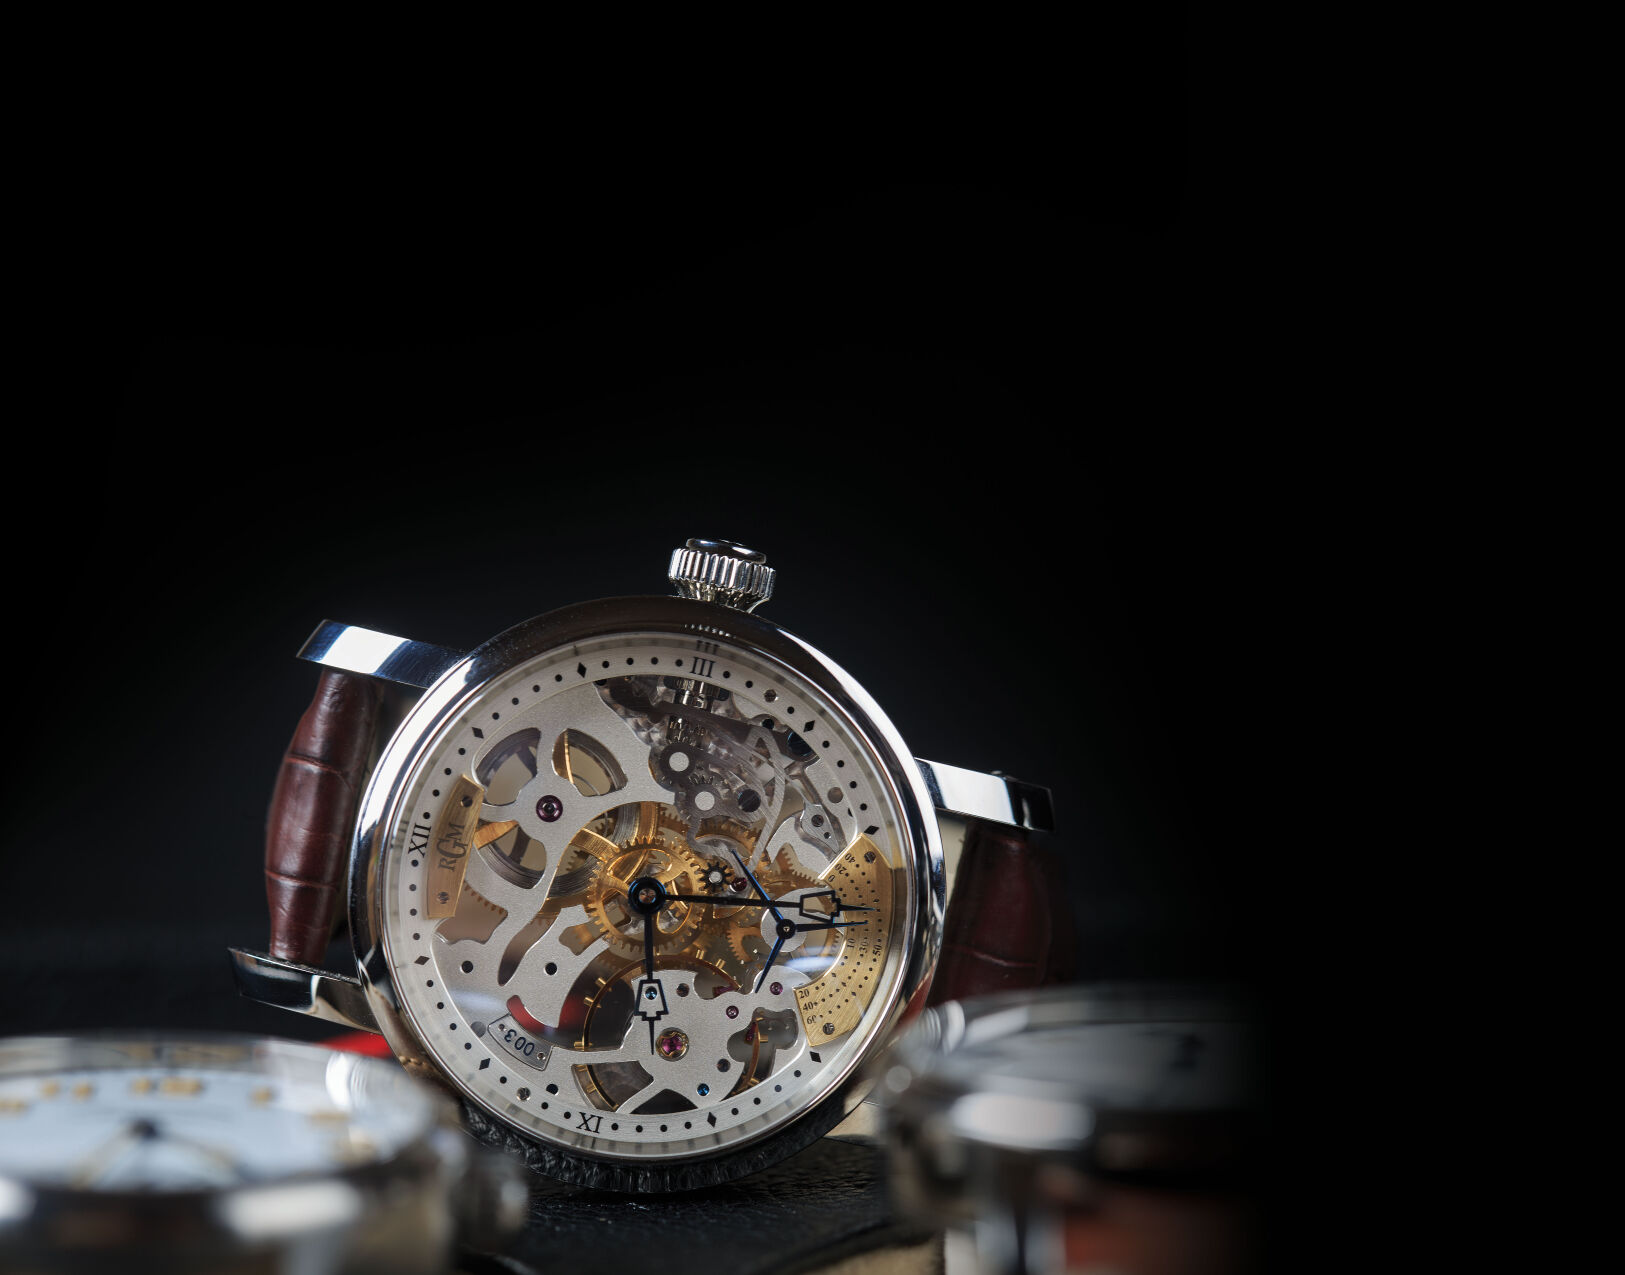 RGM Introduces Art and Handcraft Watch Models | WatchUSeek Watch Forums